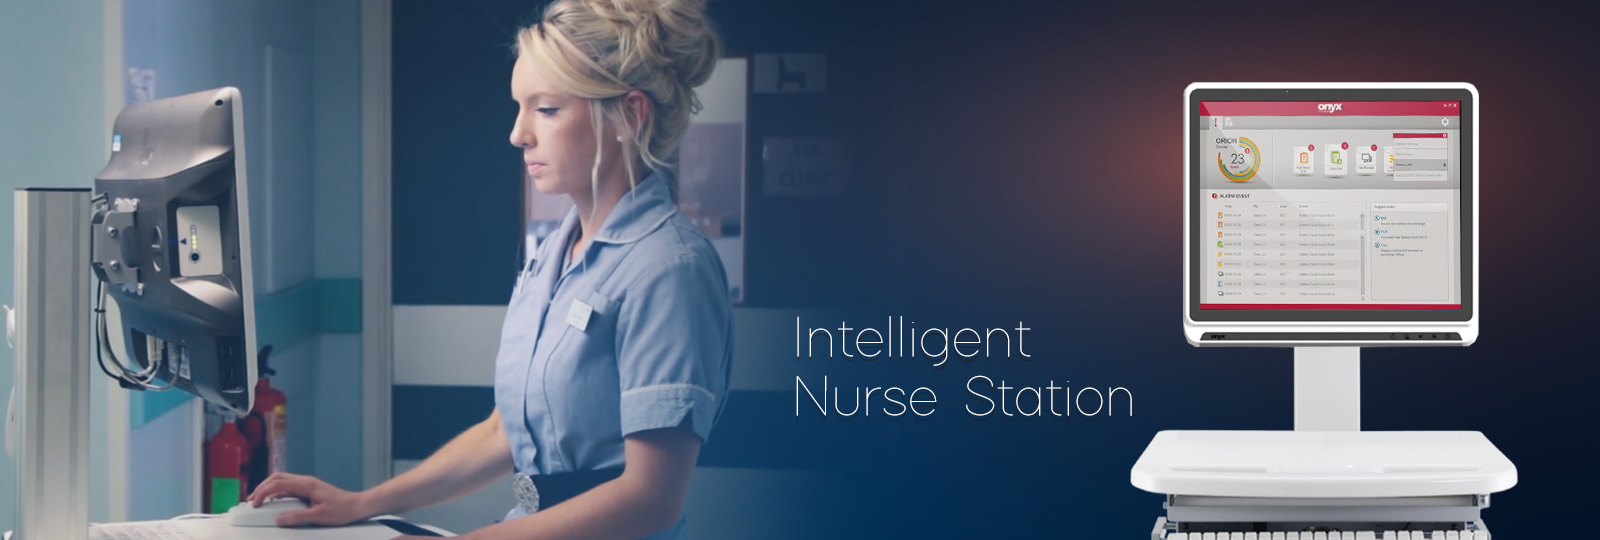 Intelligent Nurse Station